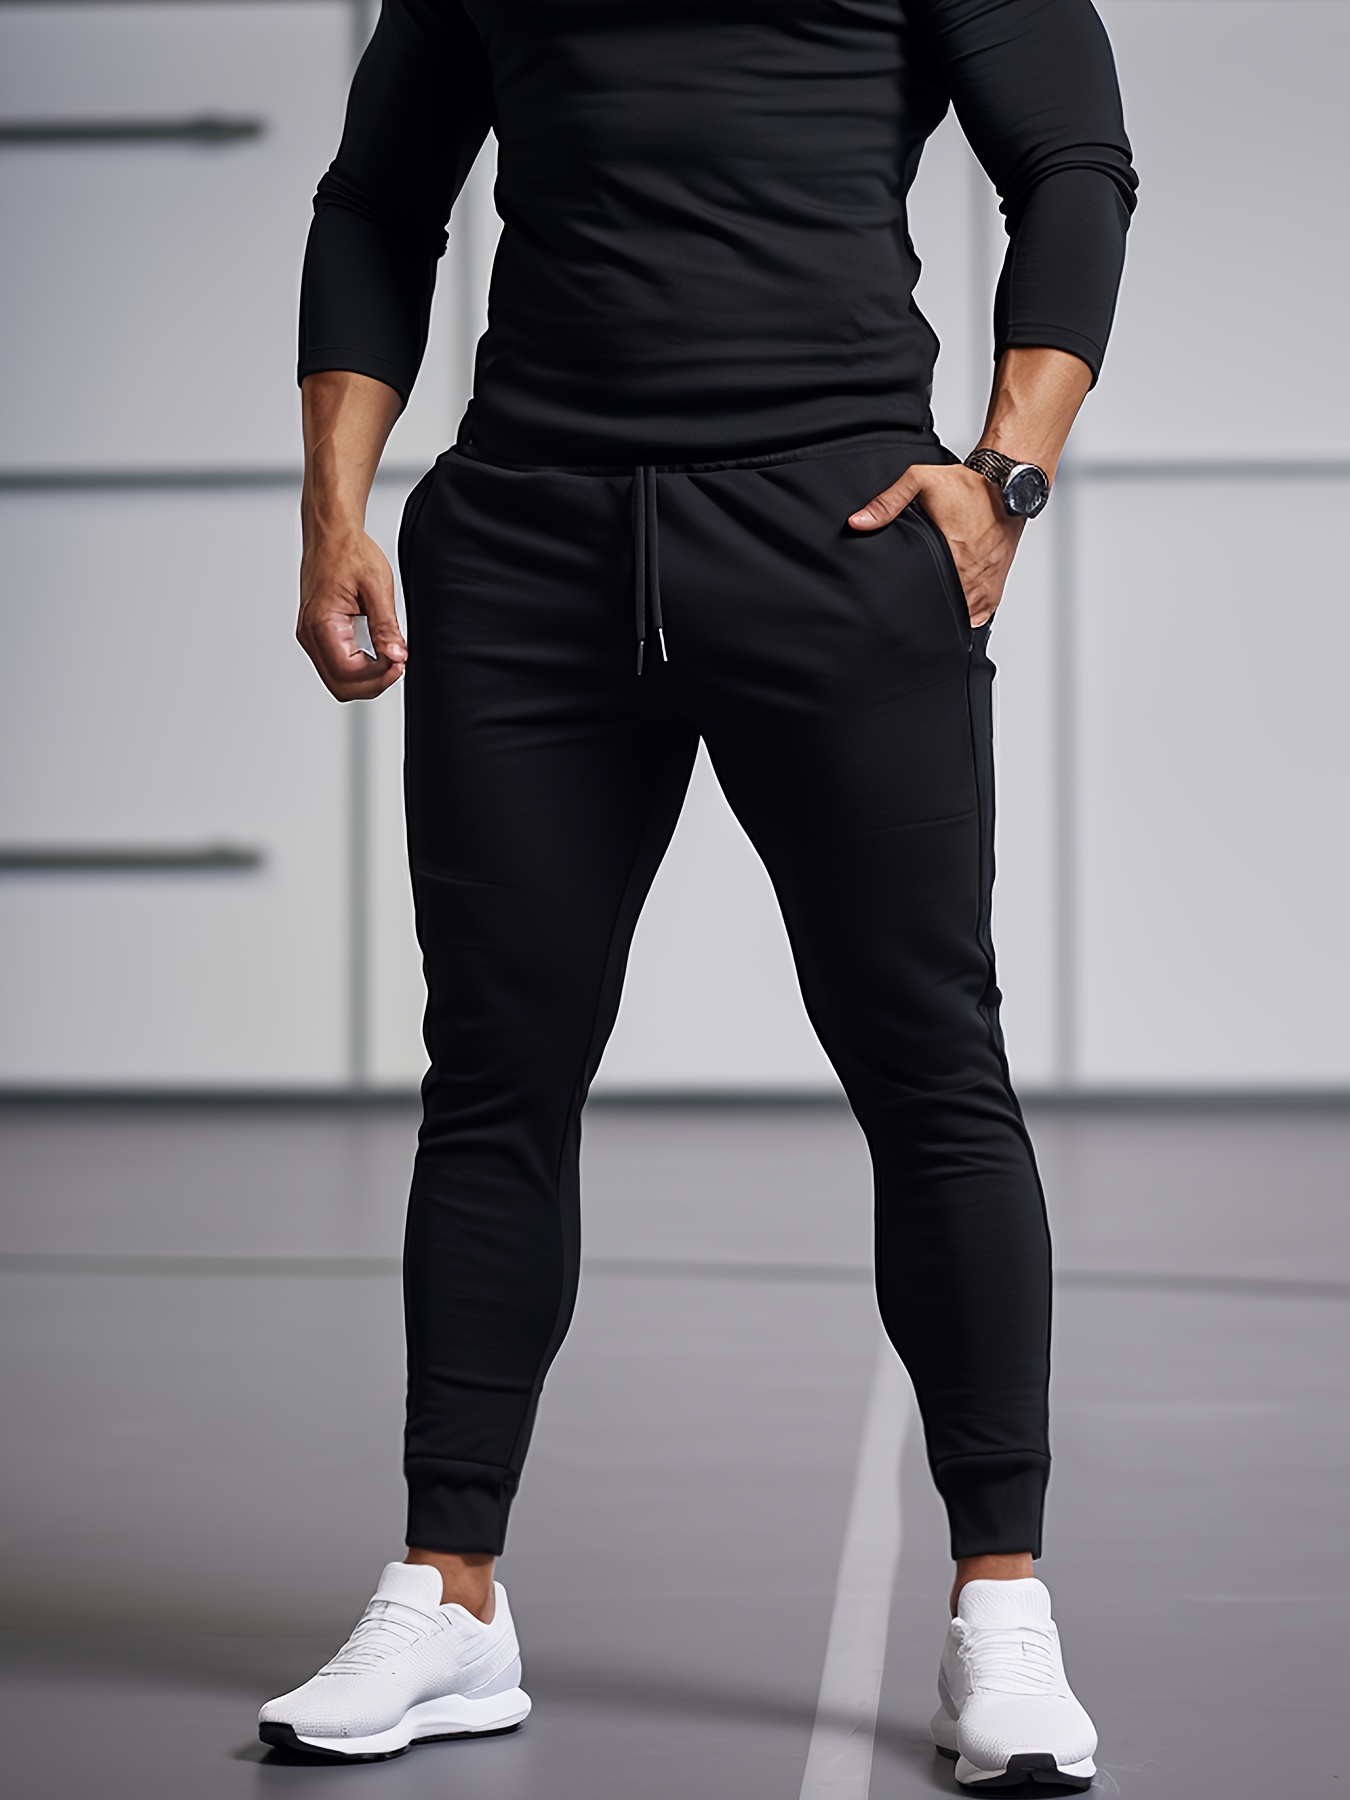 XERSION Men Sport Pants M Black Activewear Pockets Drawstring Workout